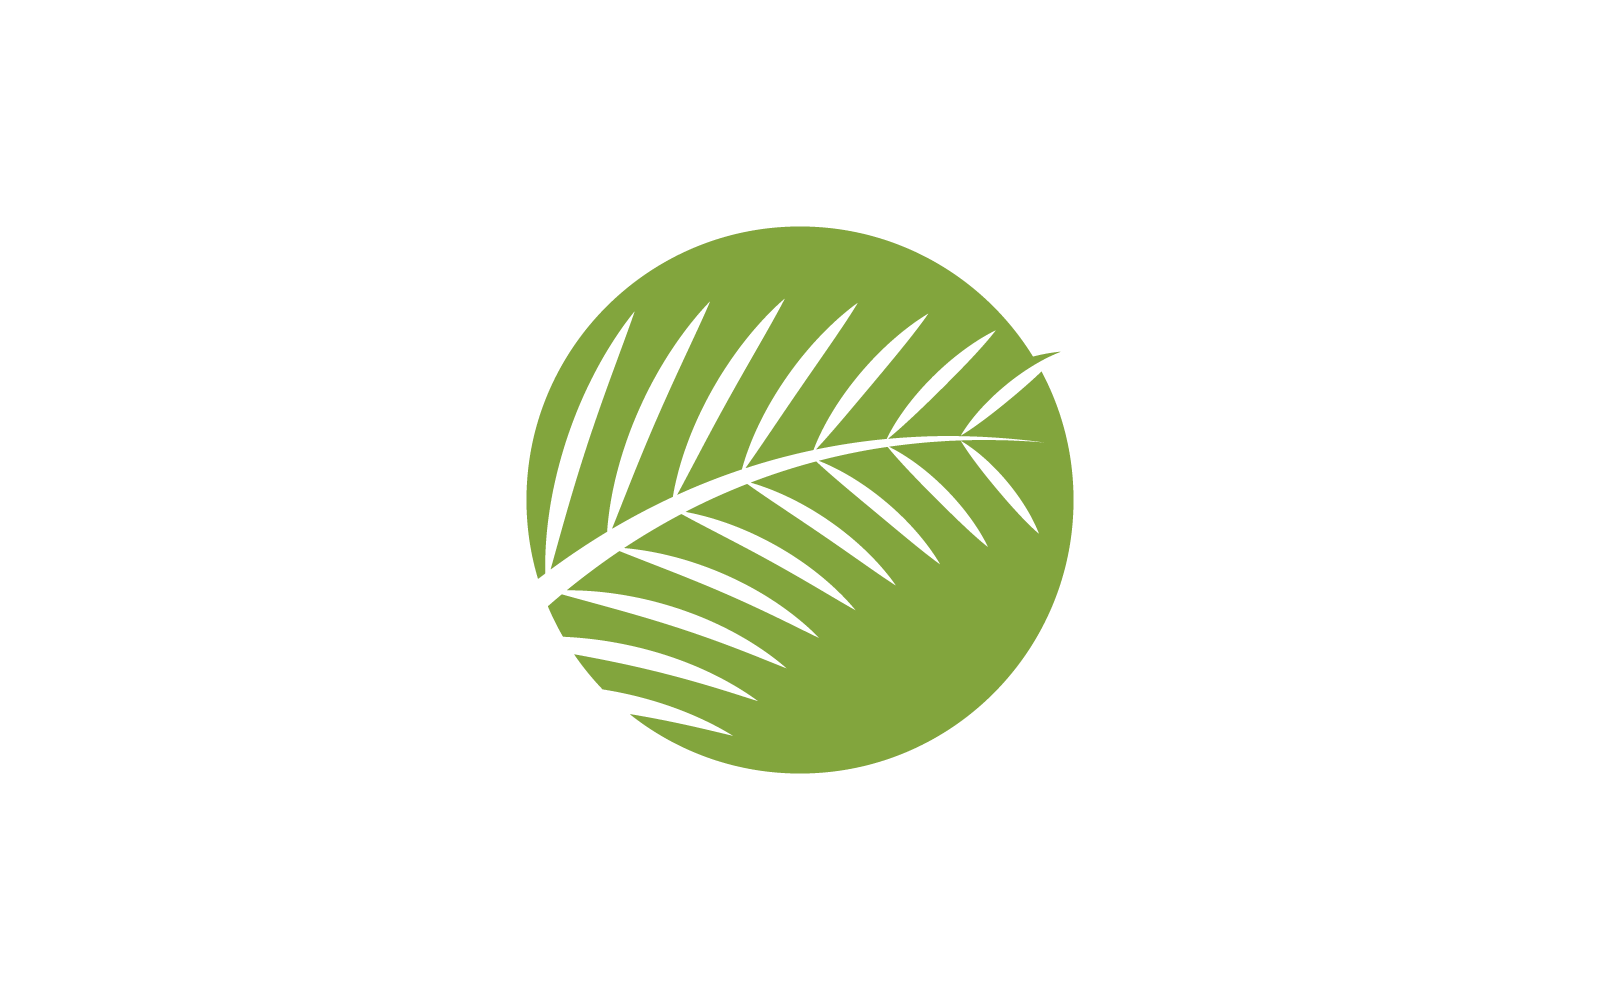 Palm tree leaf illustration logo template vector icon